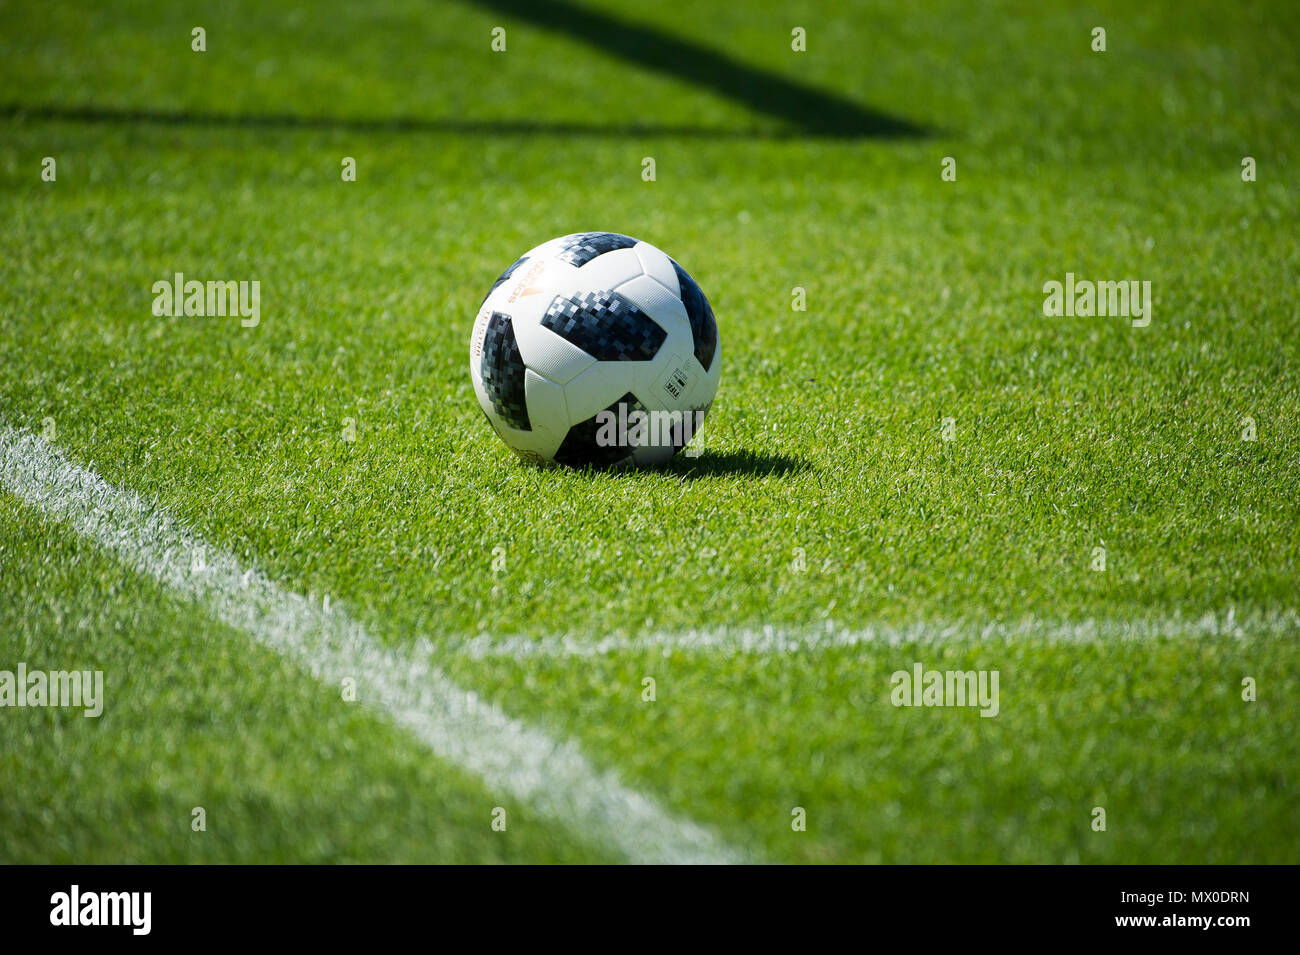 Adidas Telstar 18 ist der offizielle Spielball der FIFA Fußball-Weltmeisterschaft 2018 in Russland 23. Mai 2018 © wojciech Strozyk/Alamy Stock Foto Stockfoto